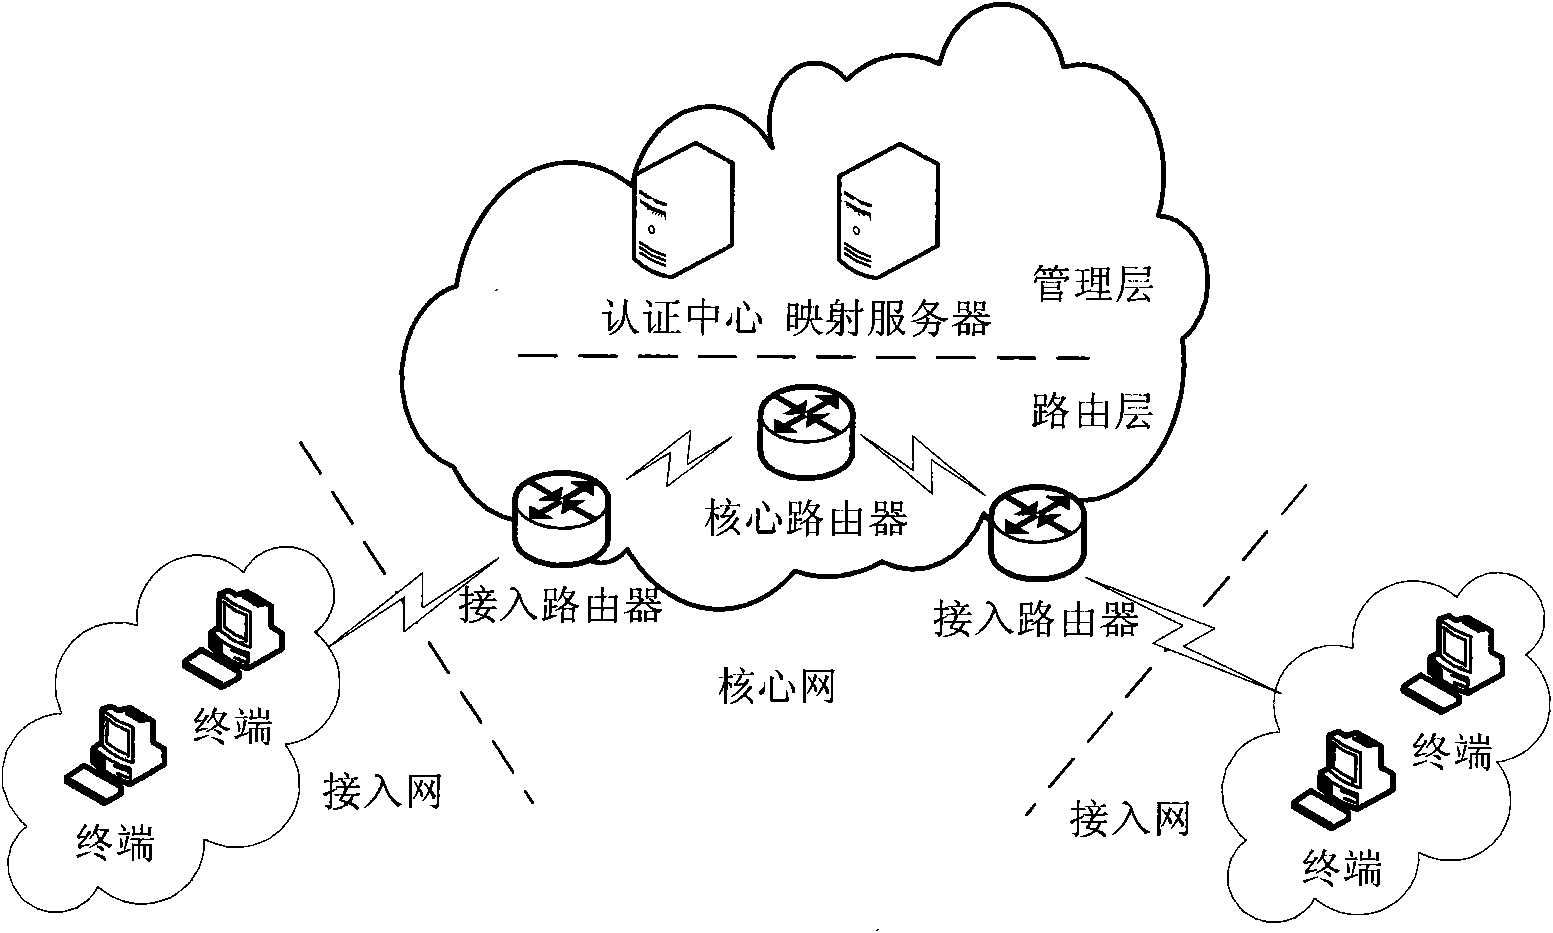 Deployment method of IPSec-VPN in address discrete mapping network